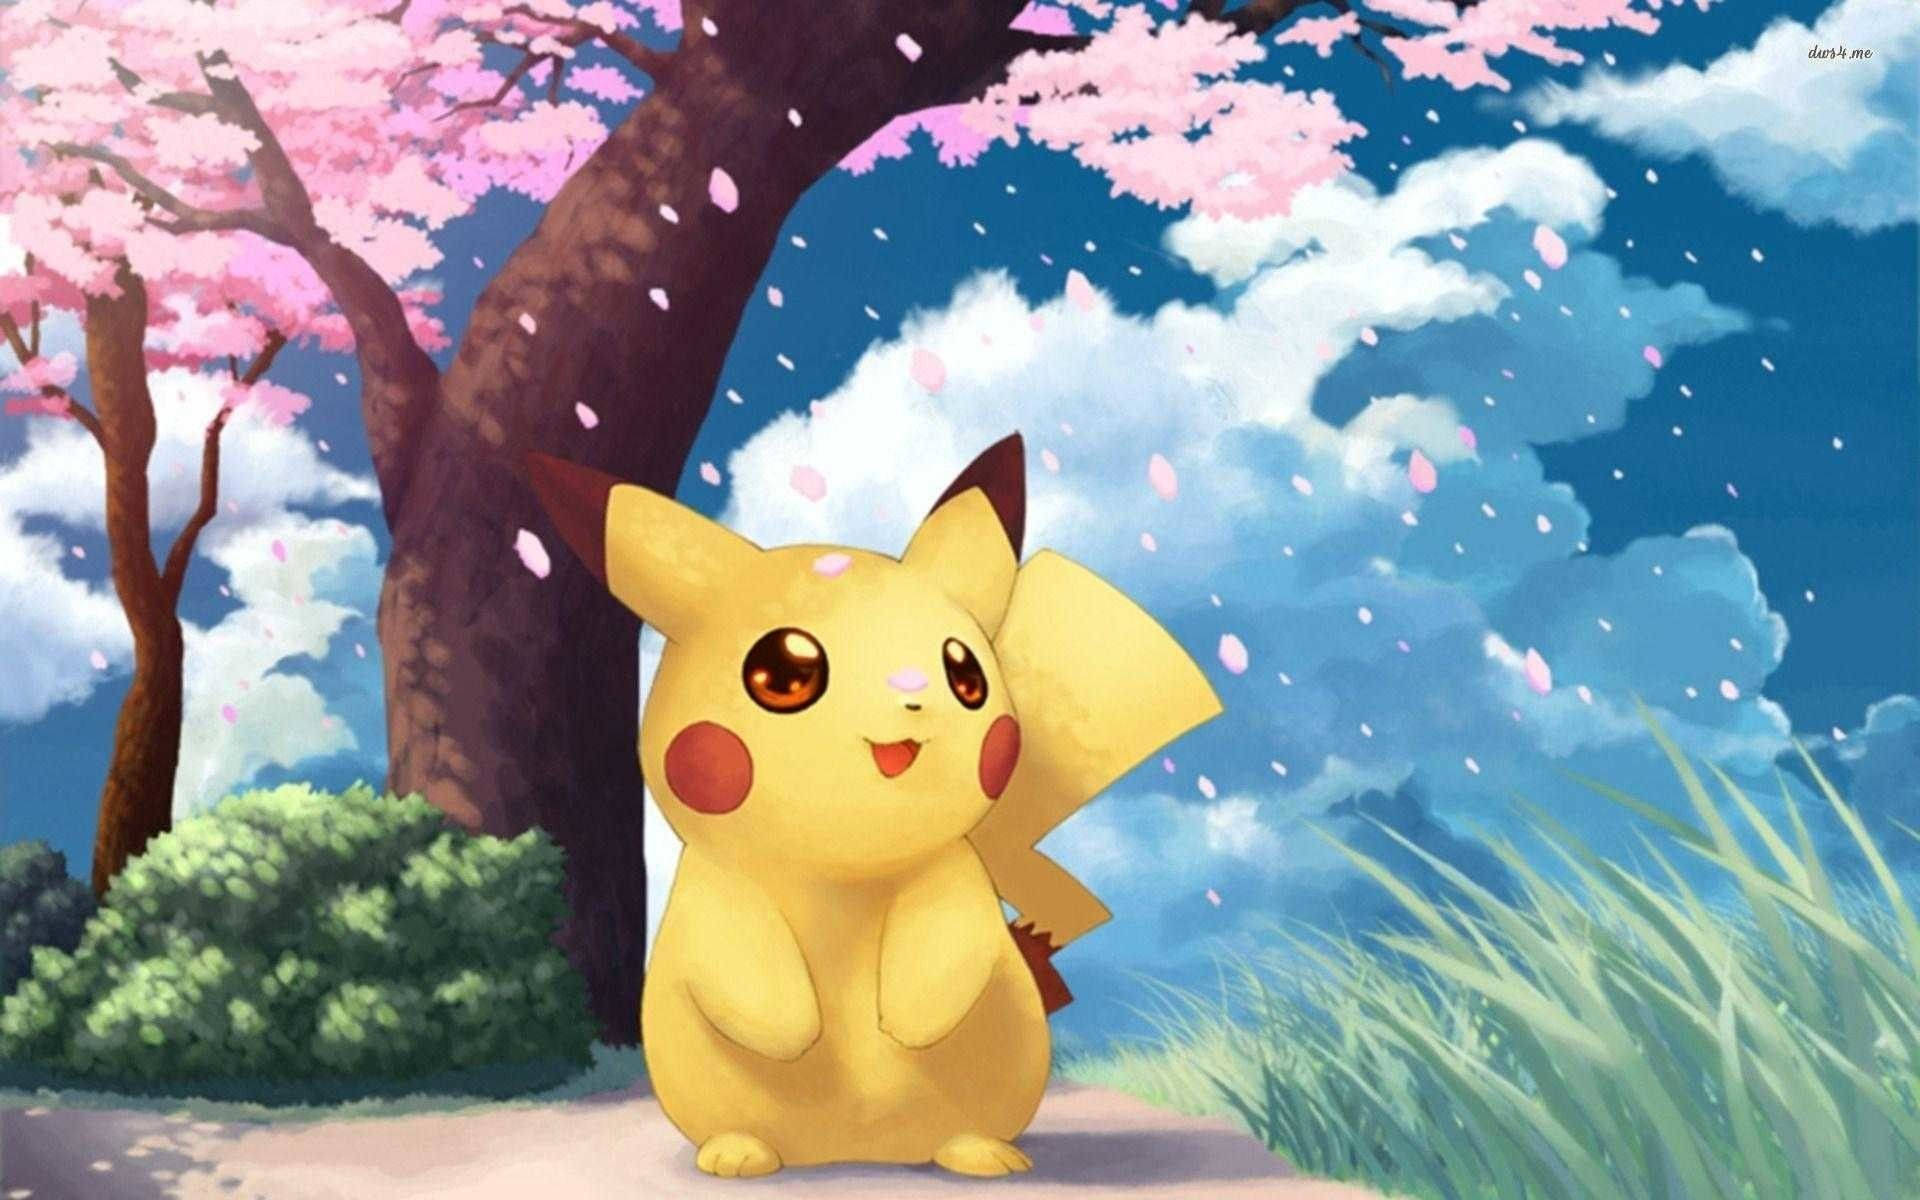 Cool Pokemon Pikachu Cherry Blossom Picture